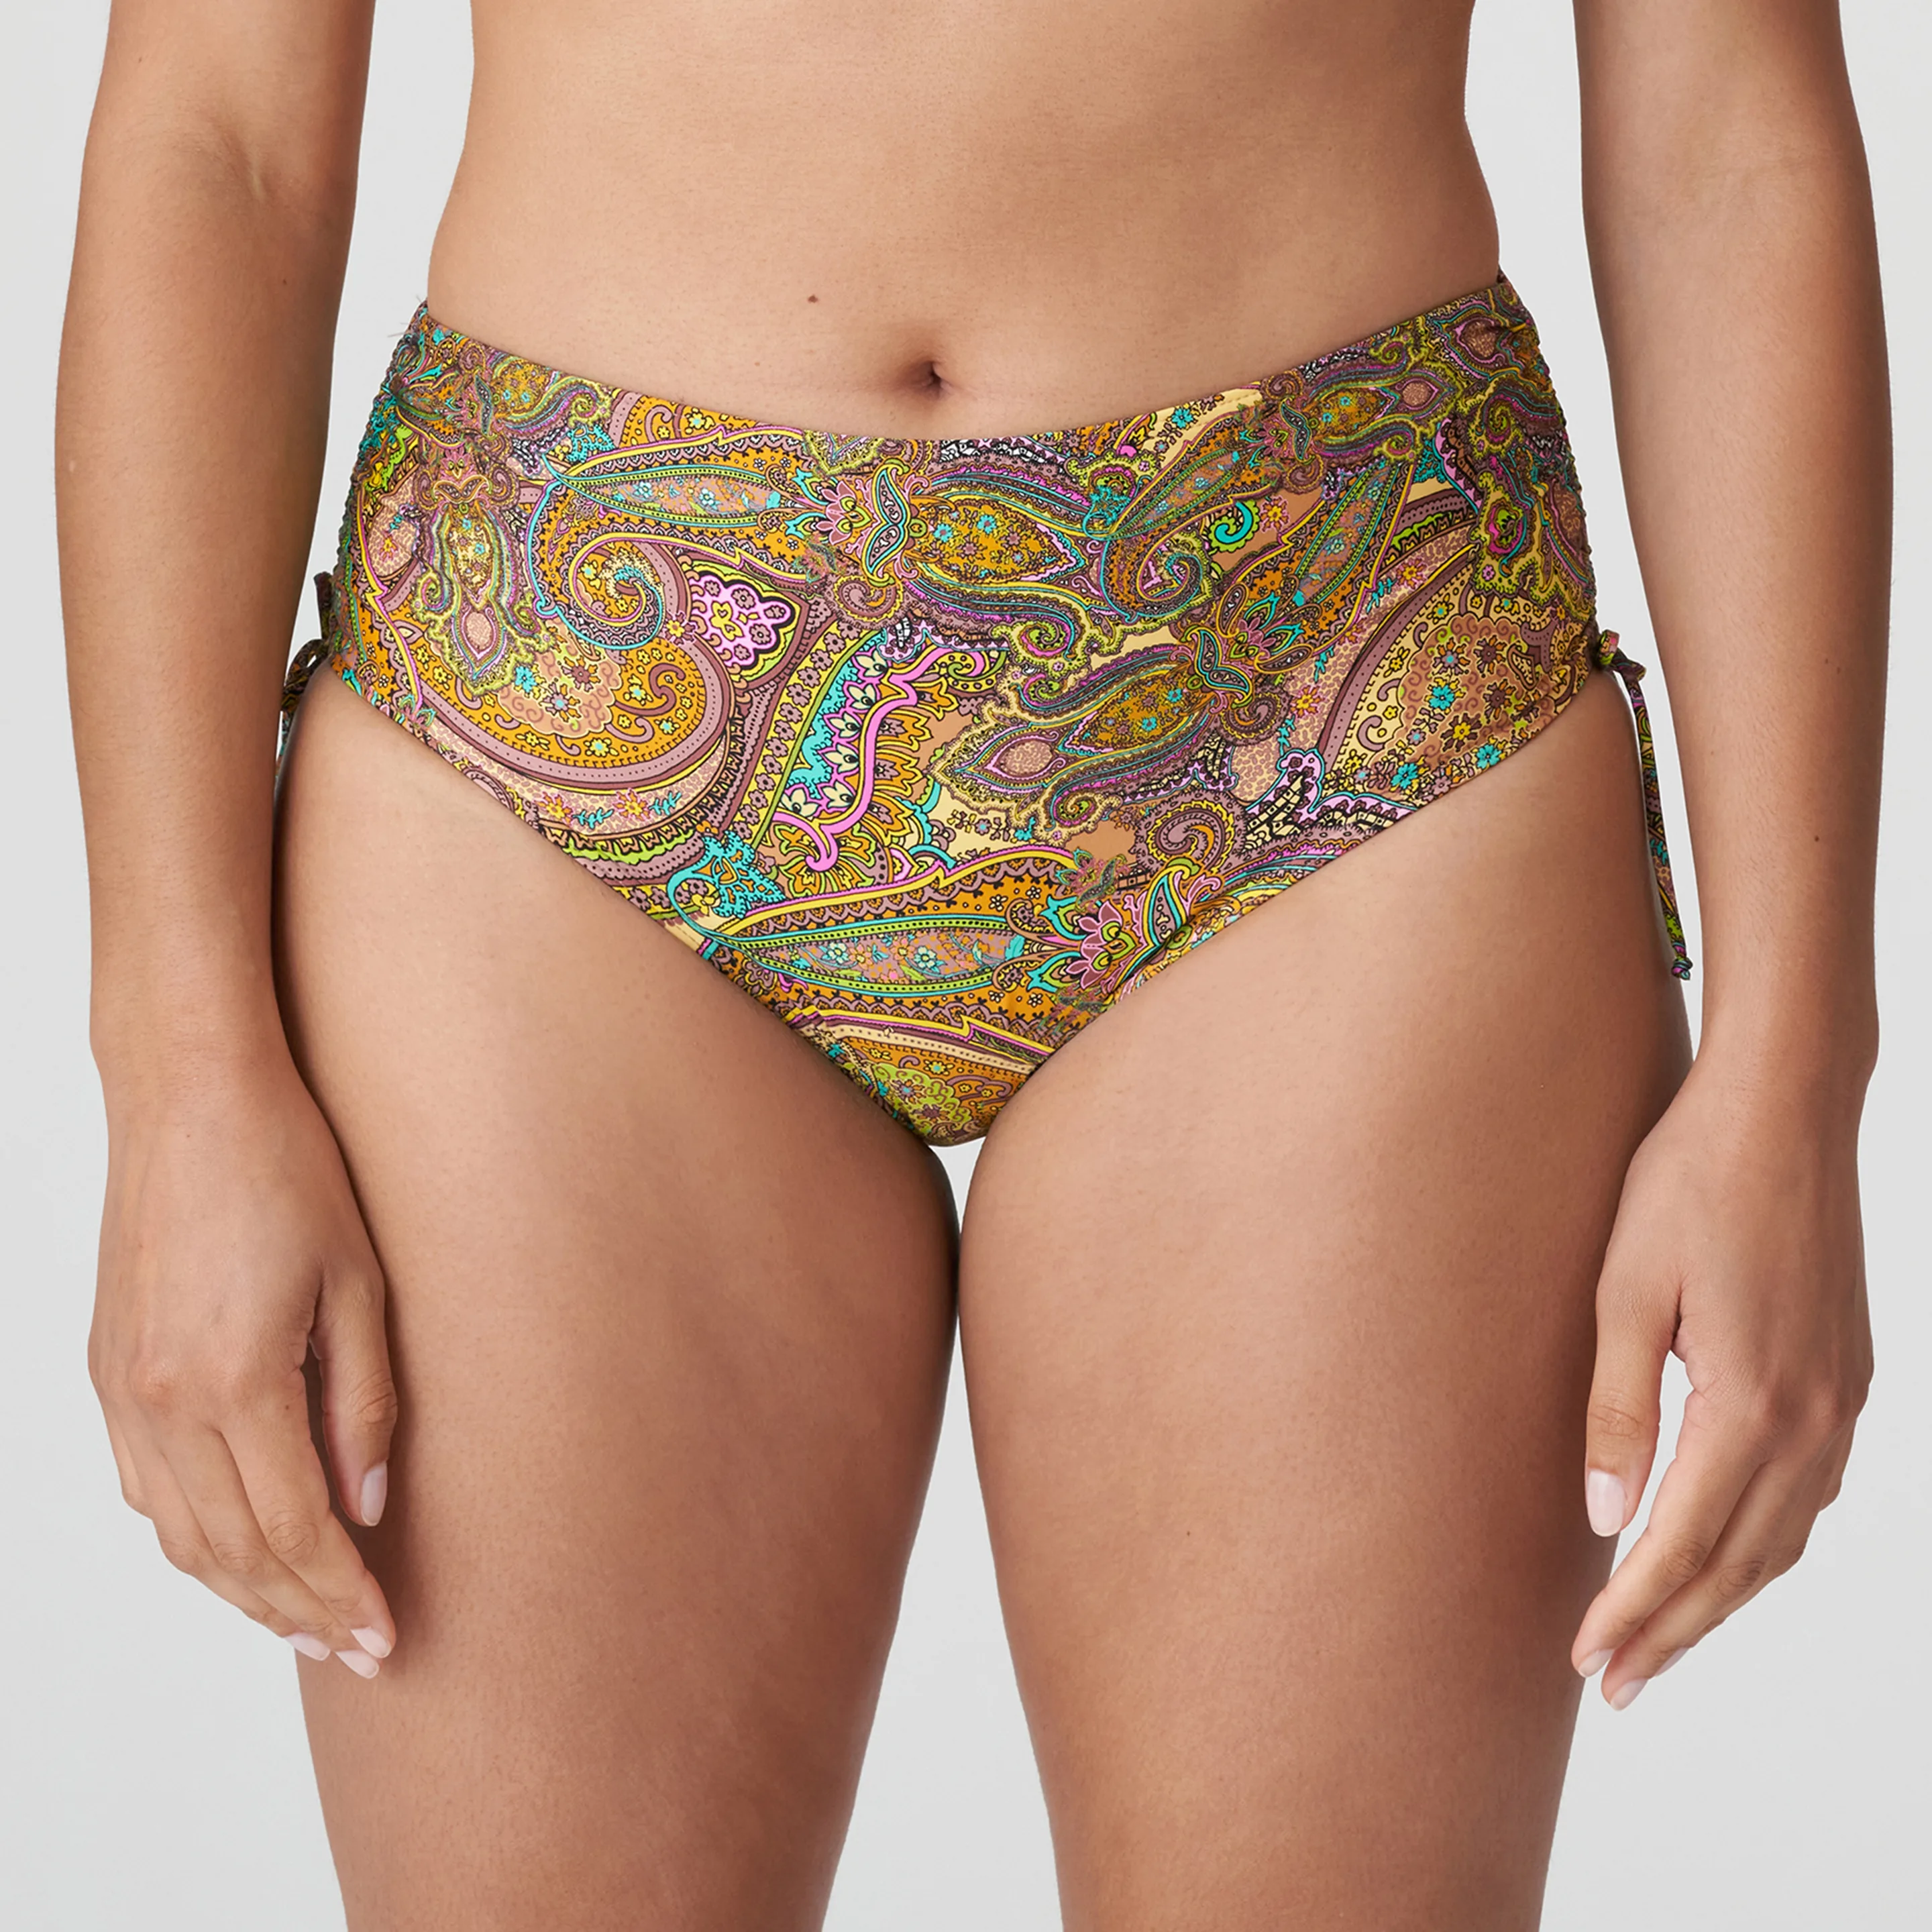 PrimaDonna Swim Sakarun Sunny Paisley bikini briefs waist ropes | United States